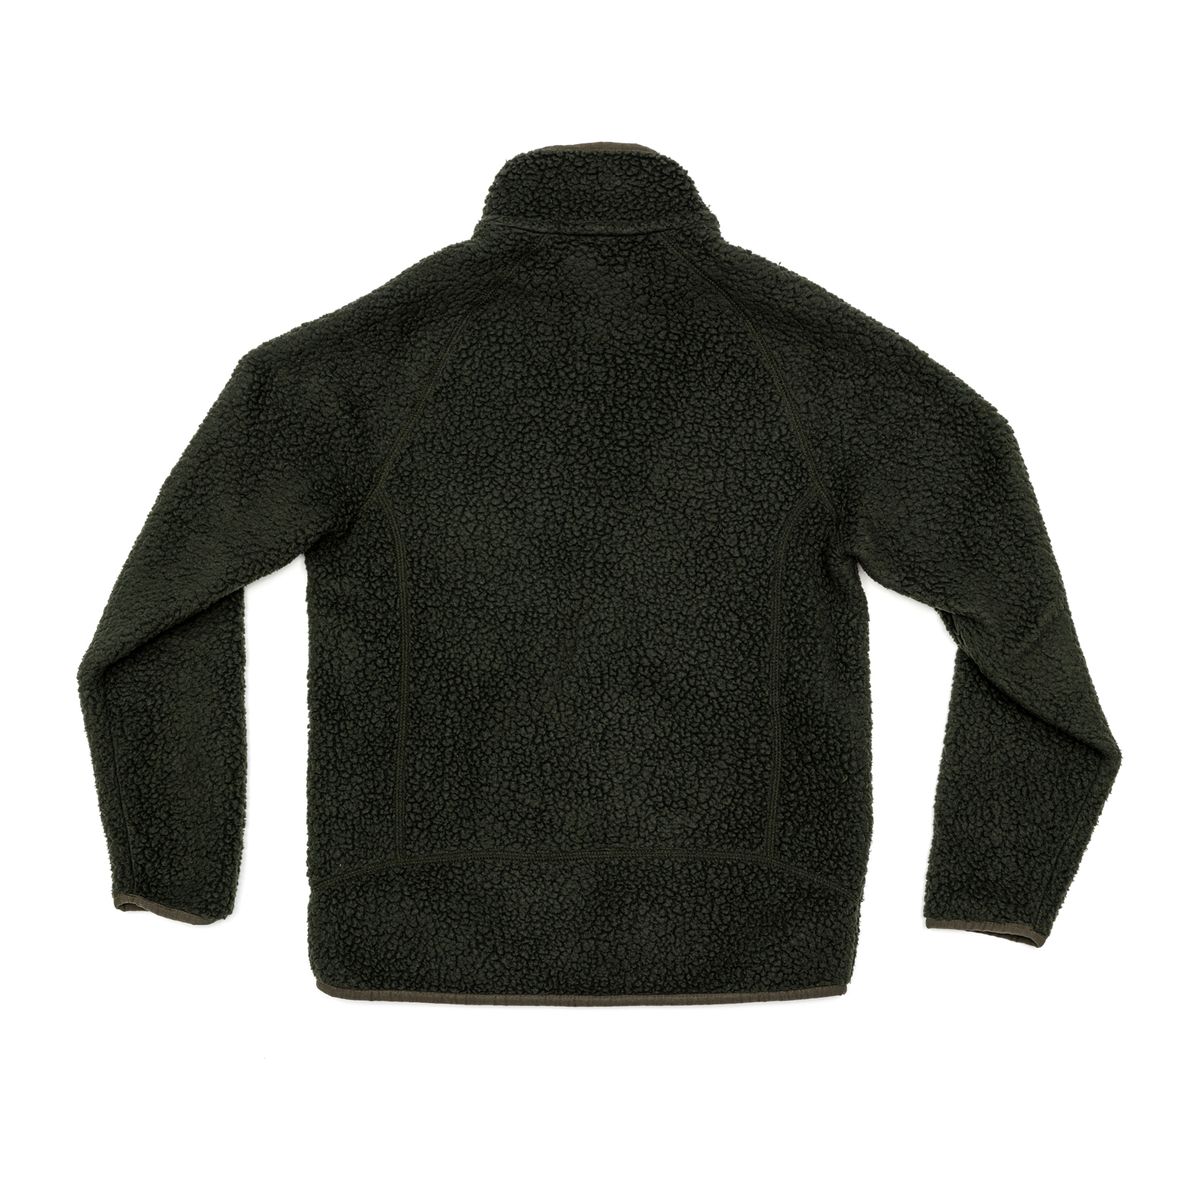 Re:Use Patagonia Kids' Retro Pile Fleece Jacket